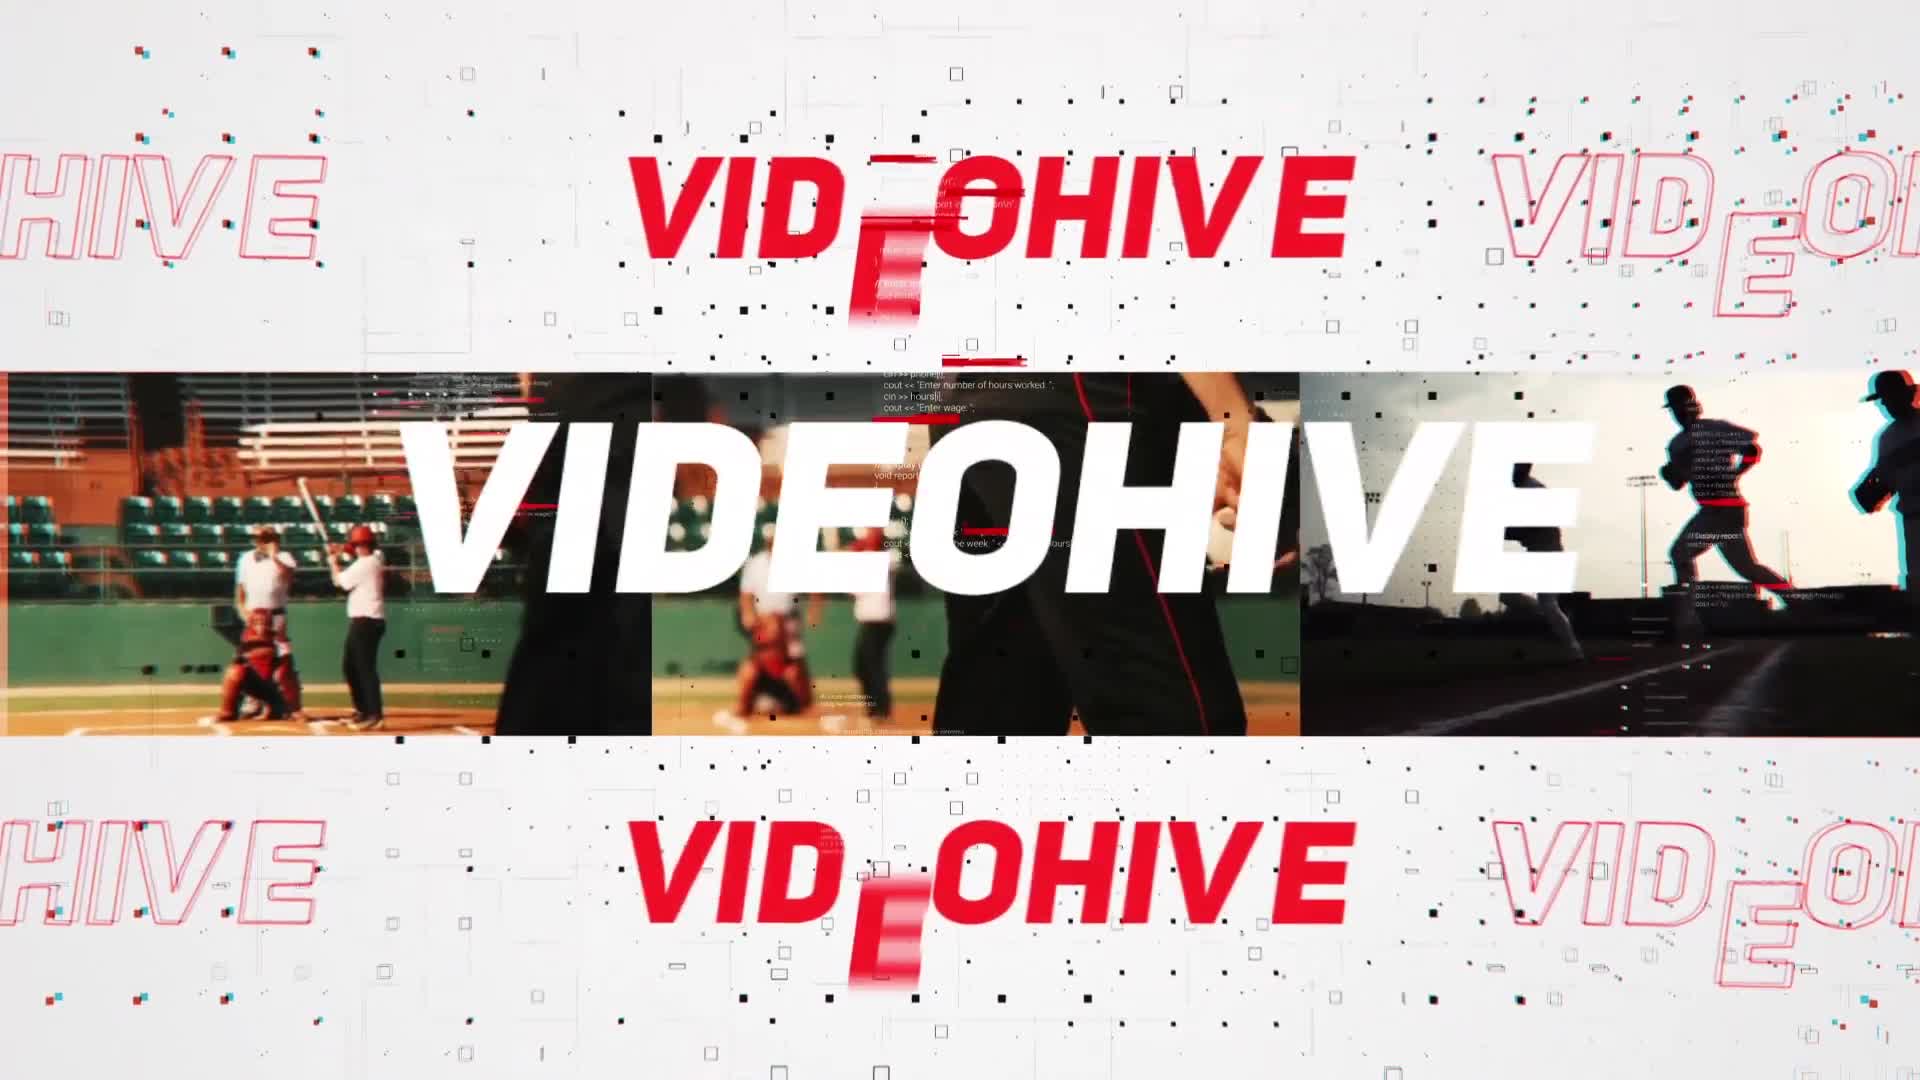 Baseball Team Opener - Download Videohive 23143203